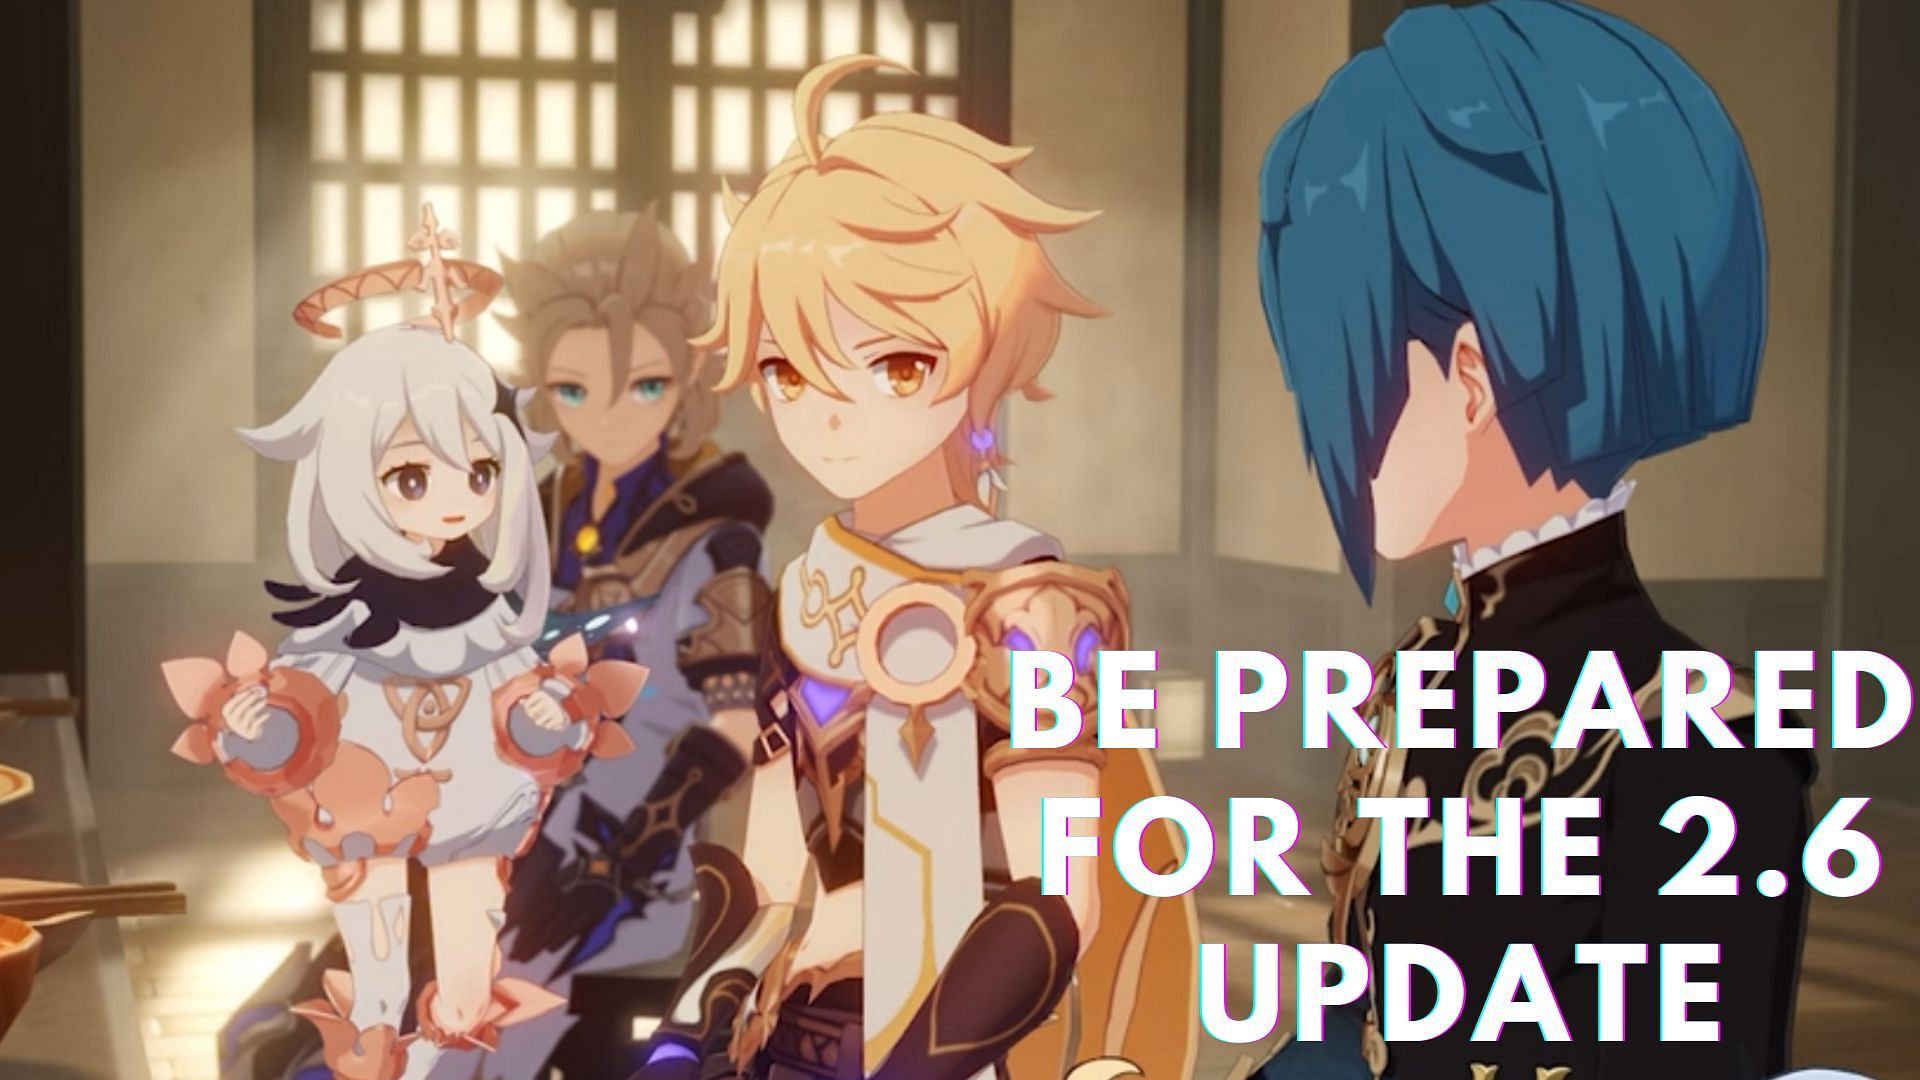 How to prepare for the 2.6 update (Original Image via Genshin Impact)